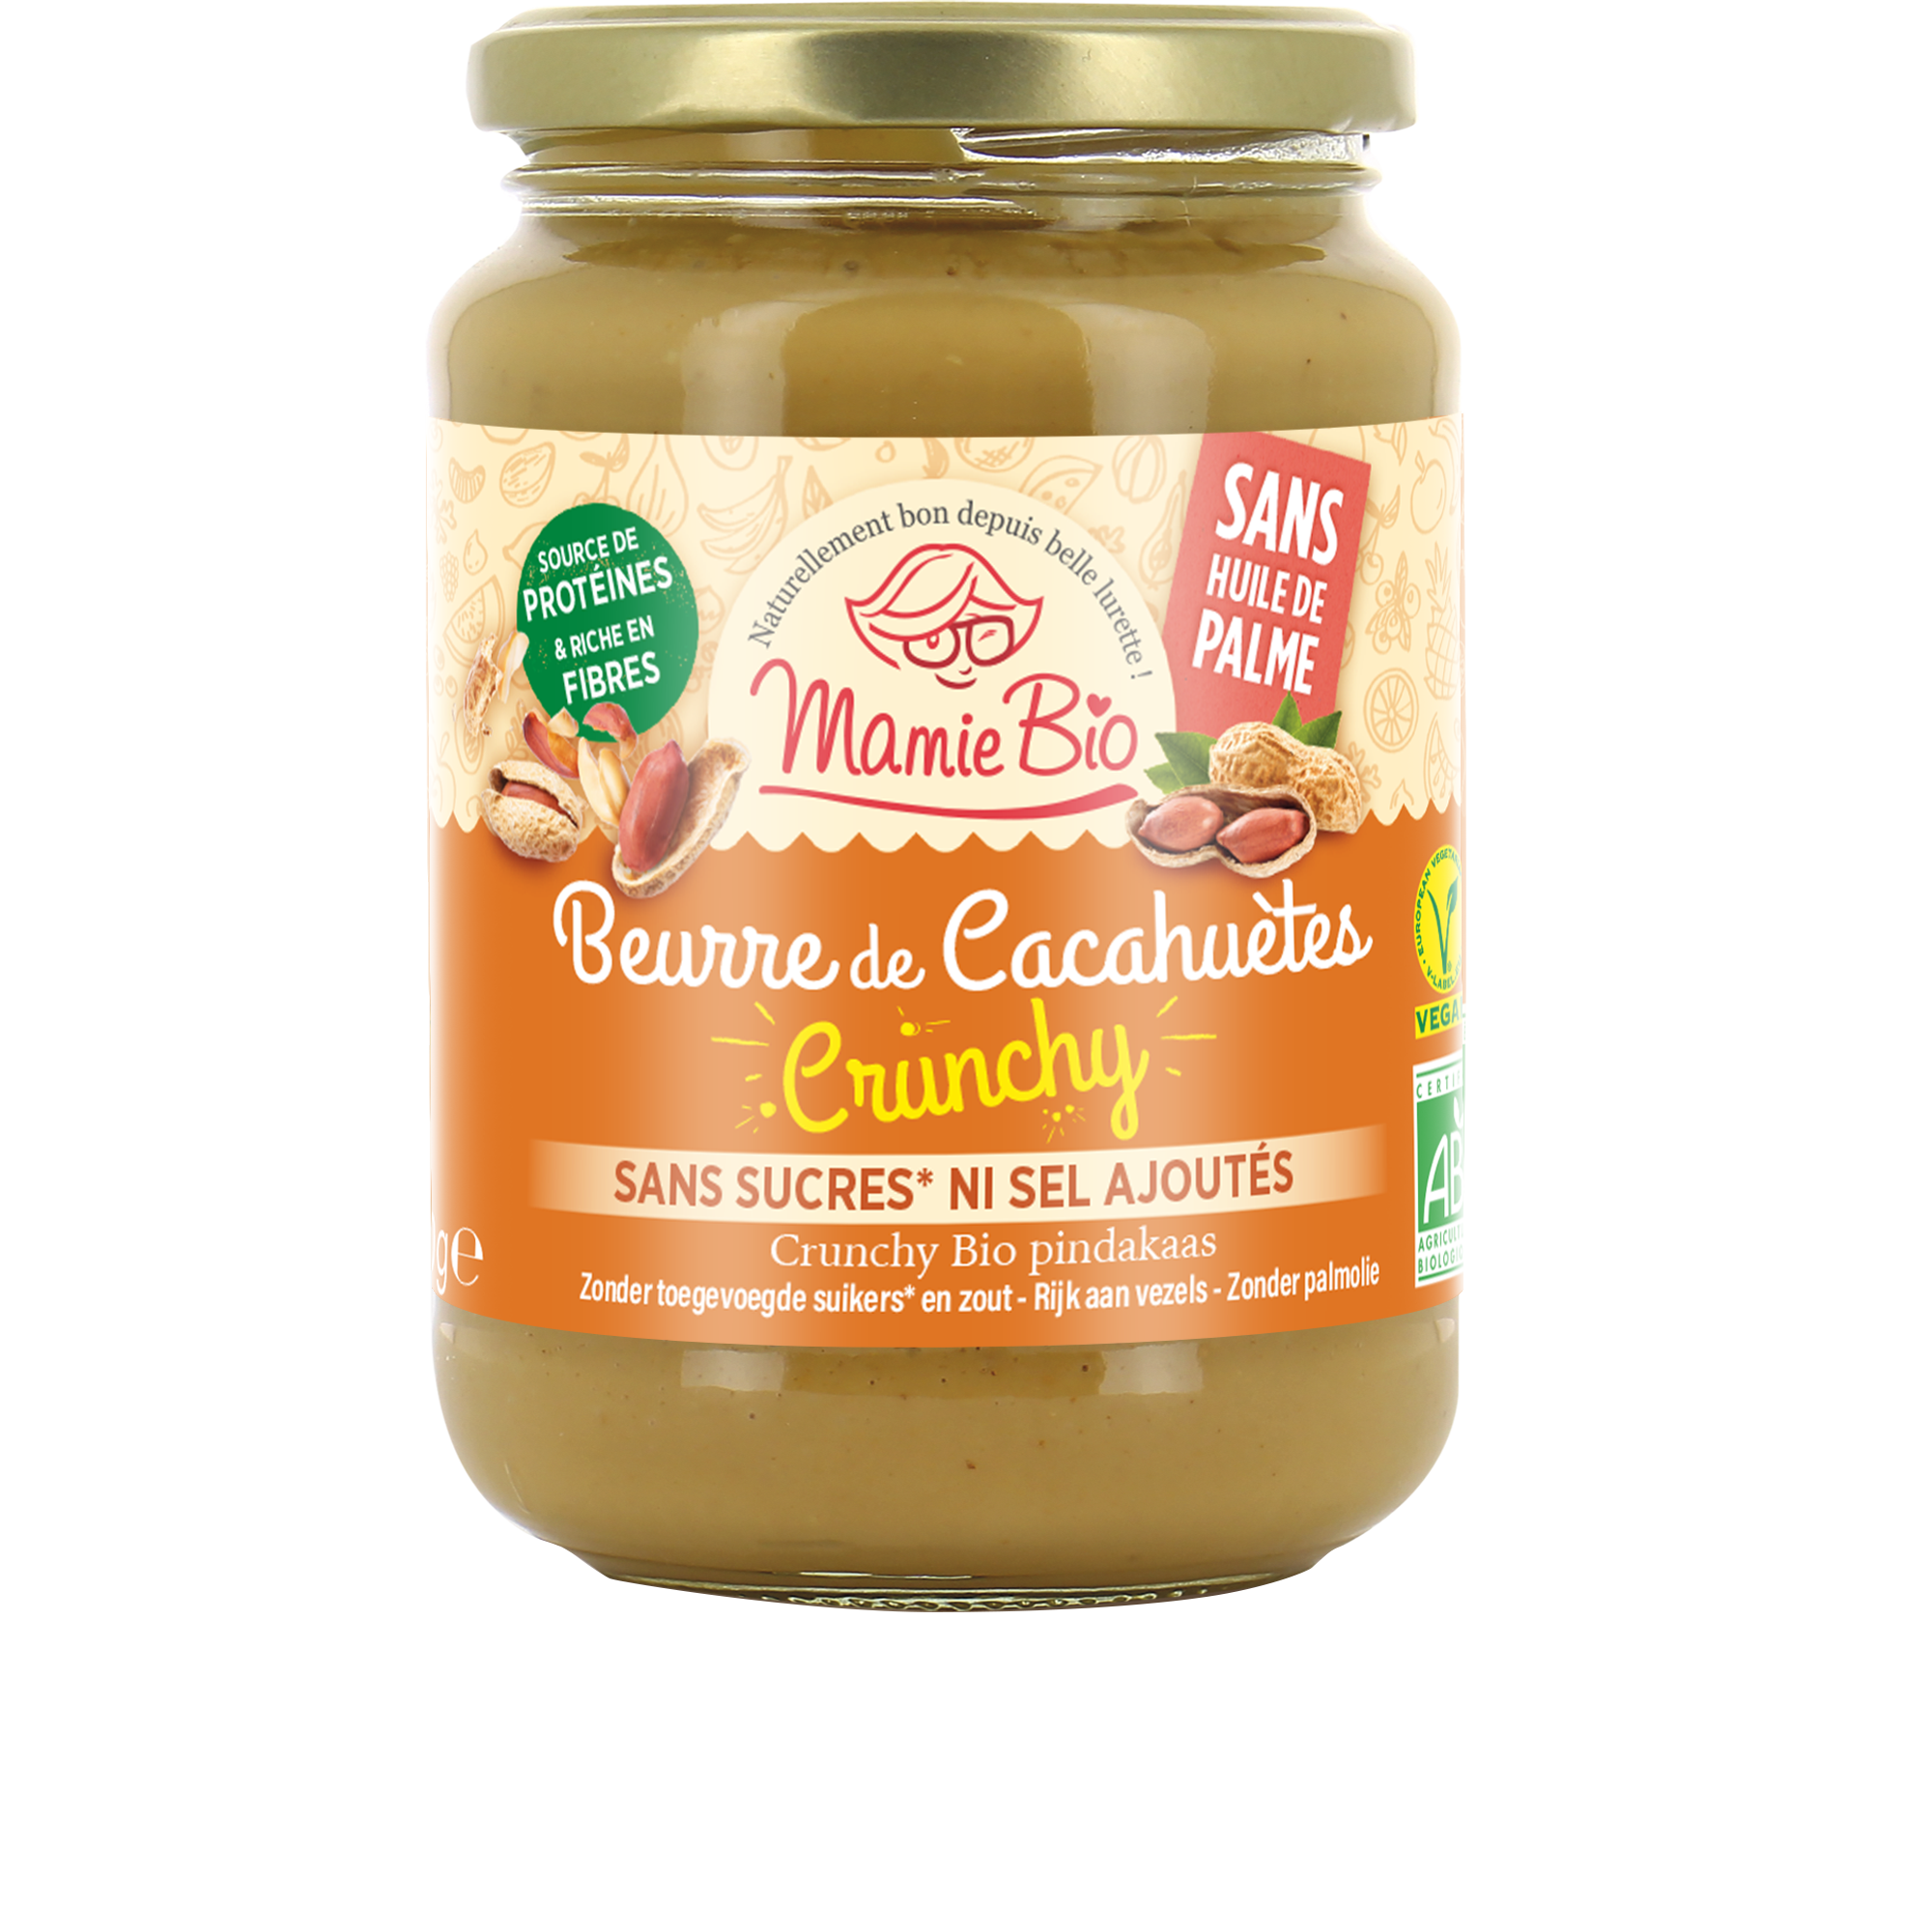 Beurre de cacahuètes crunchy bio 500g